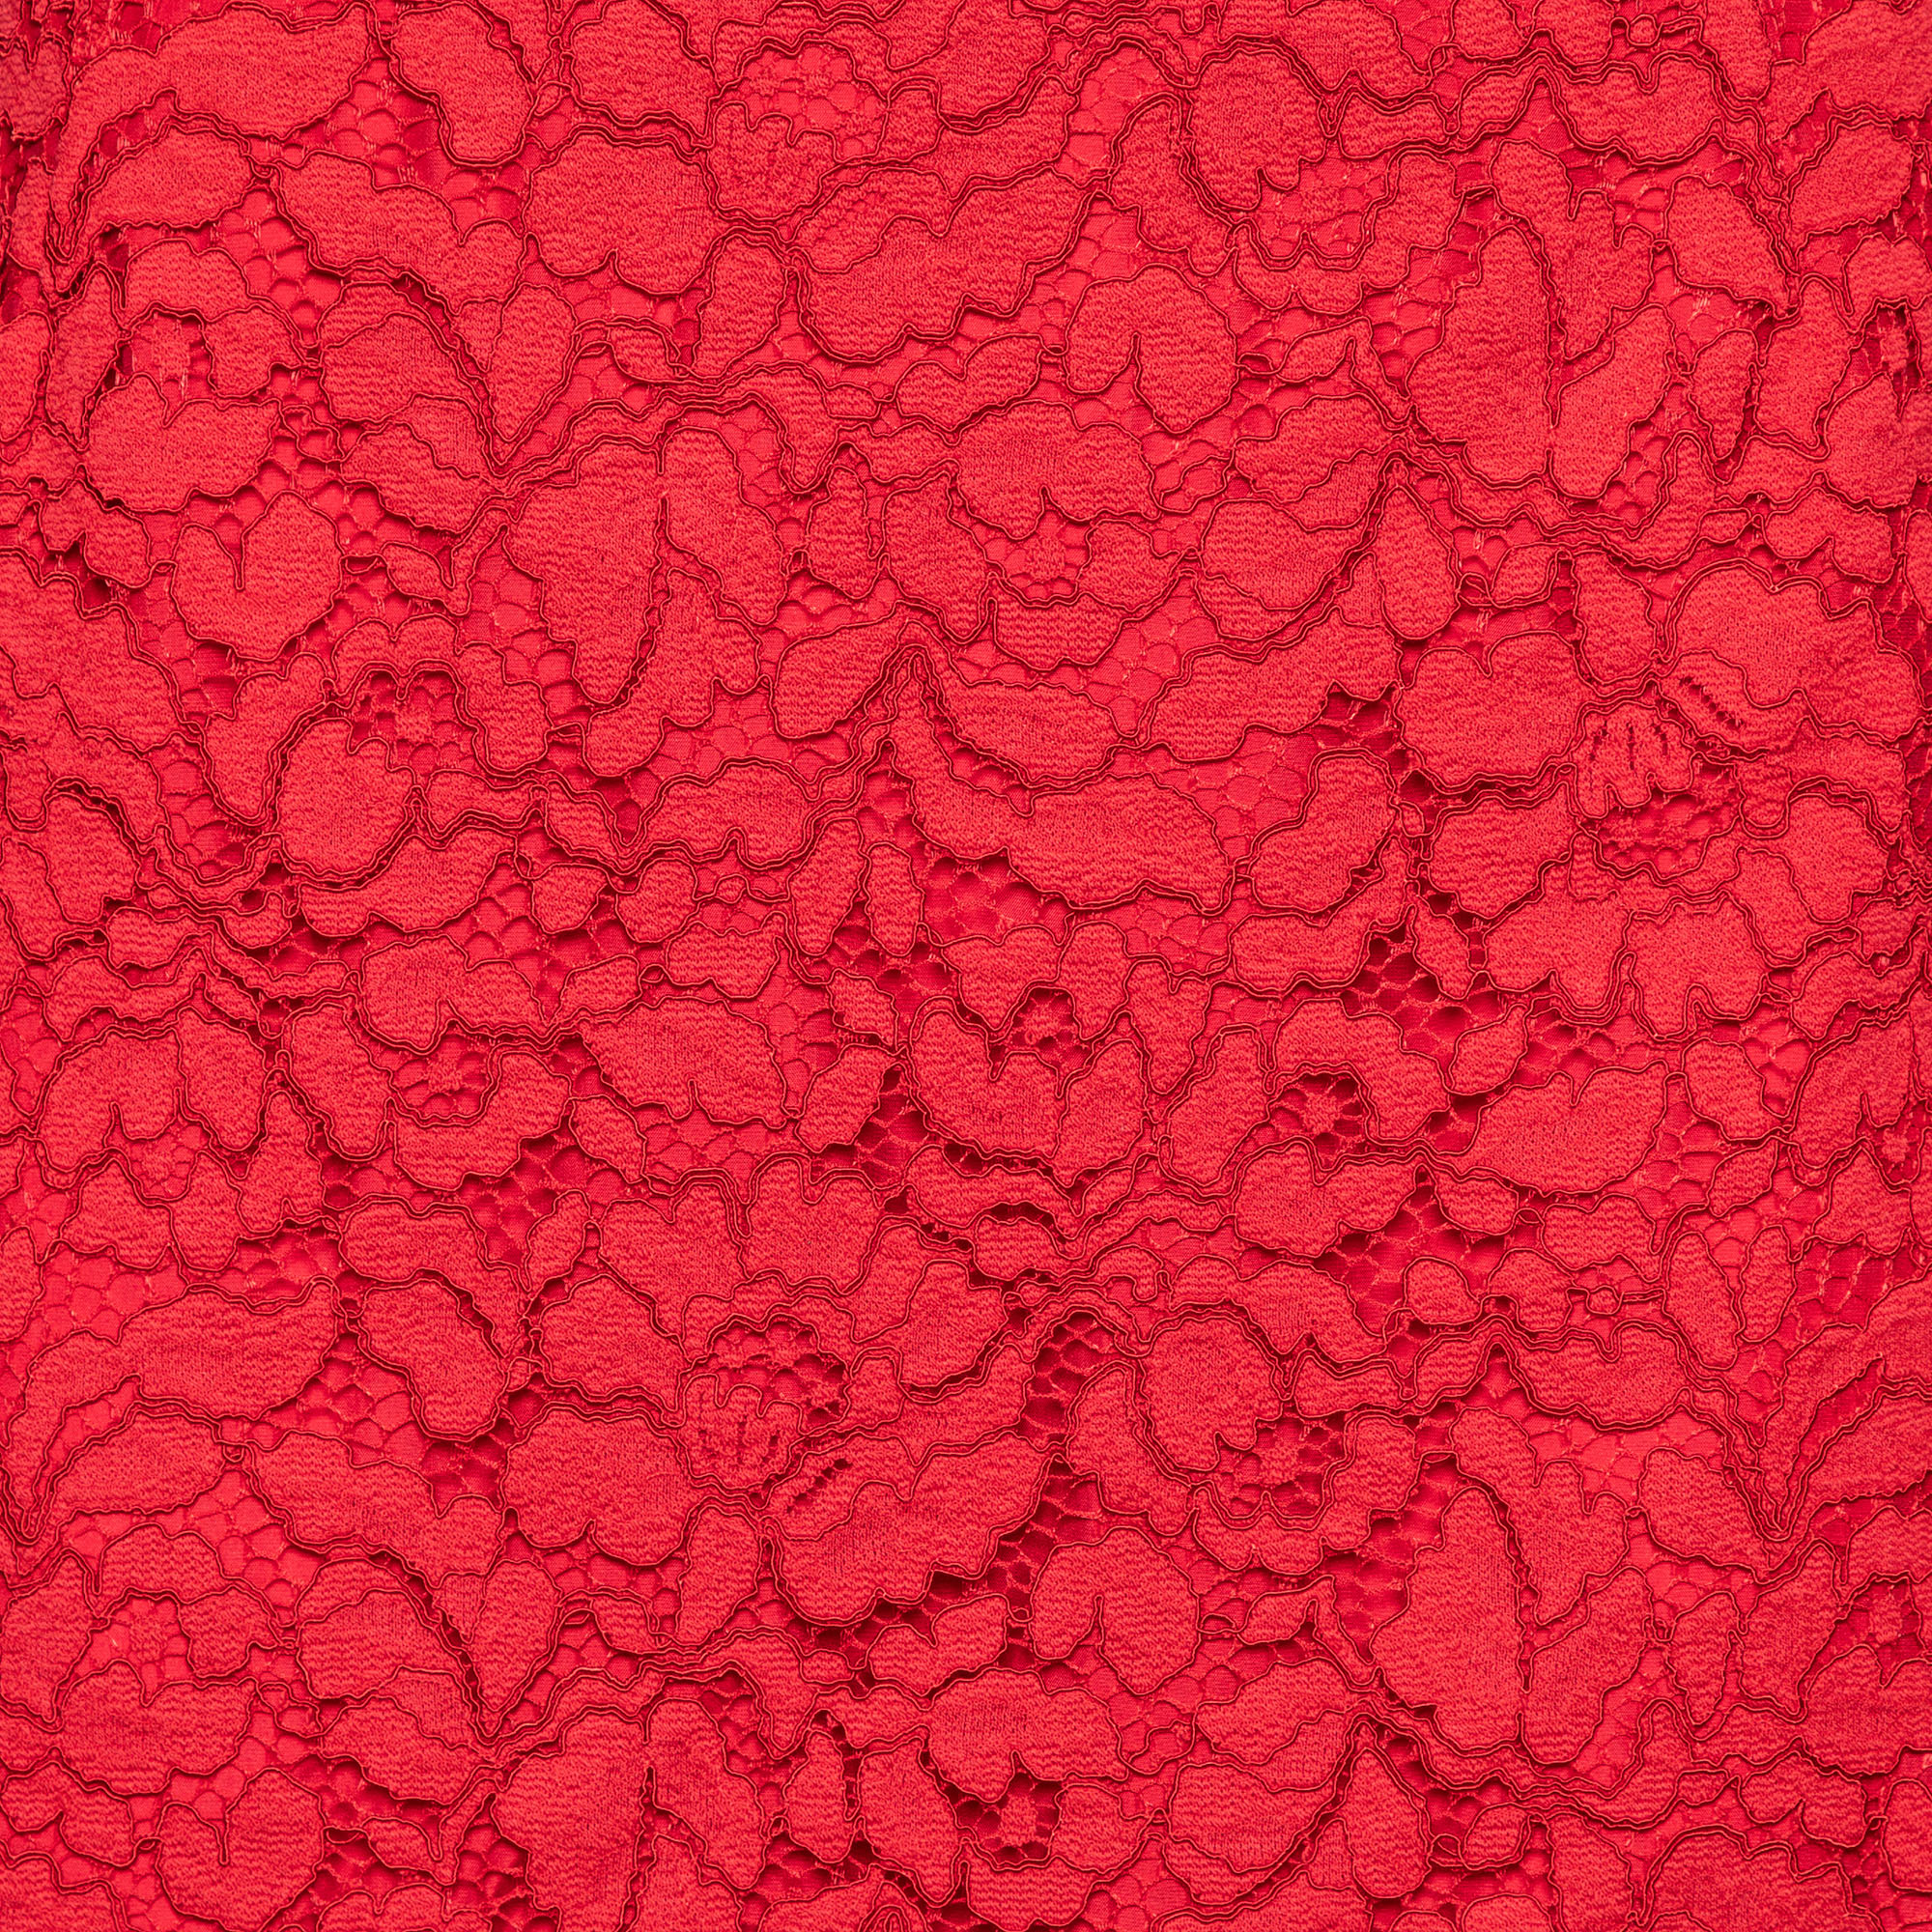 CH Carolina Herrera Red Lace Trim Detail Mini Skirt M